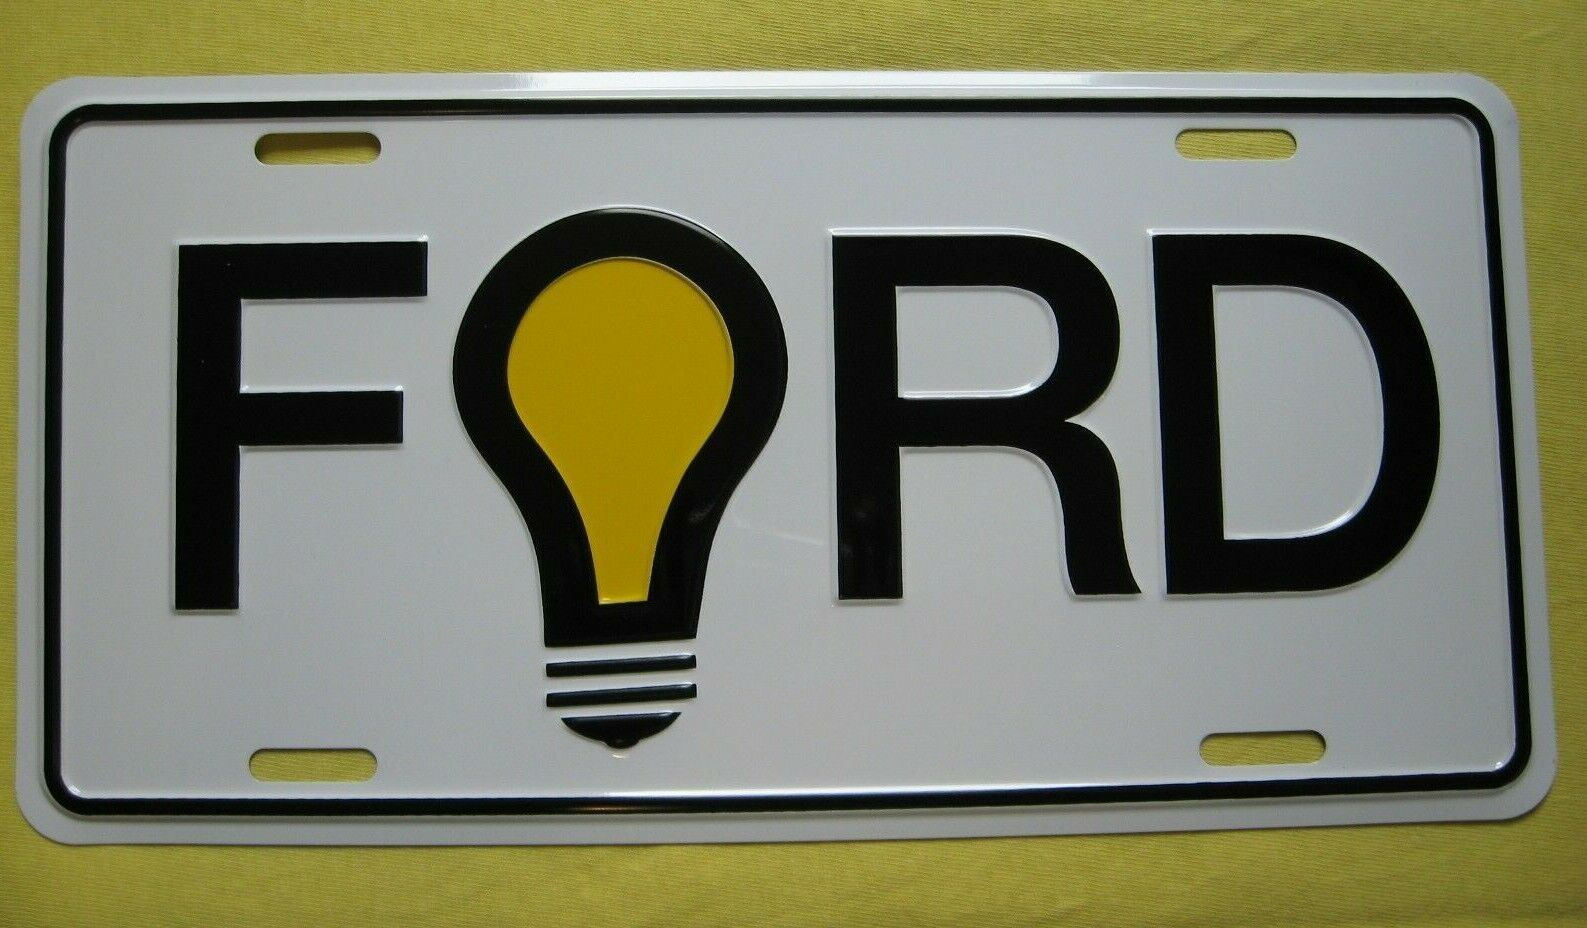 FoRD Light Bulb BETTER IDEA - advertising vanity license plate tag * BRAND NEW *